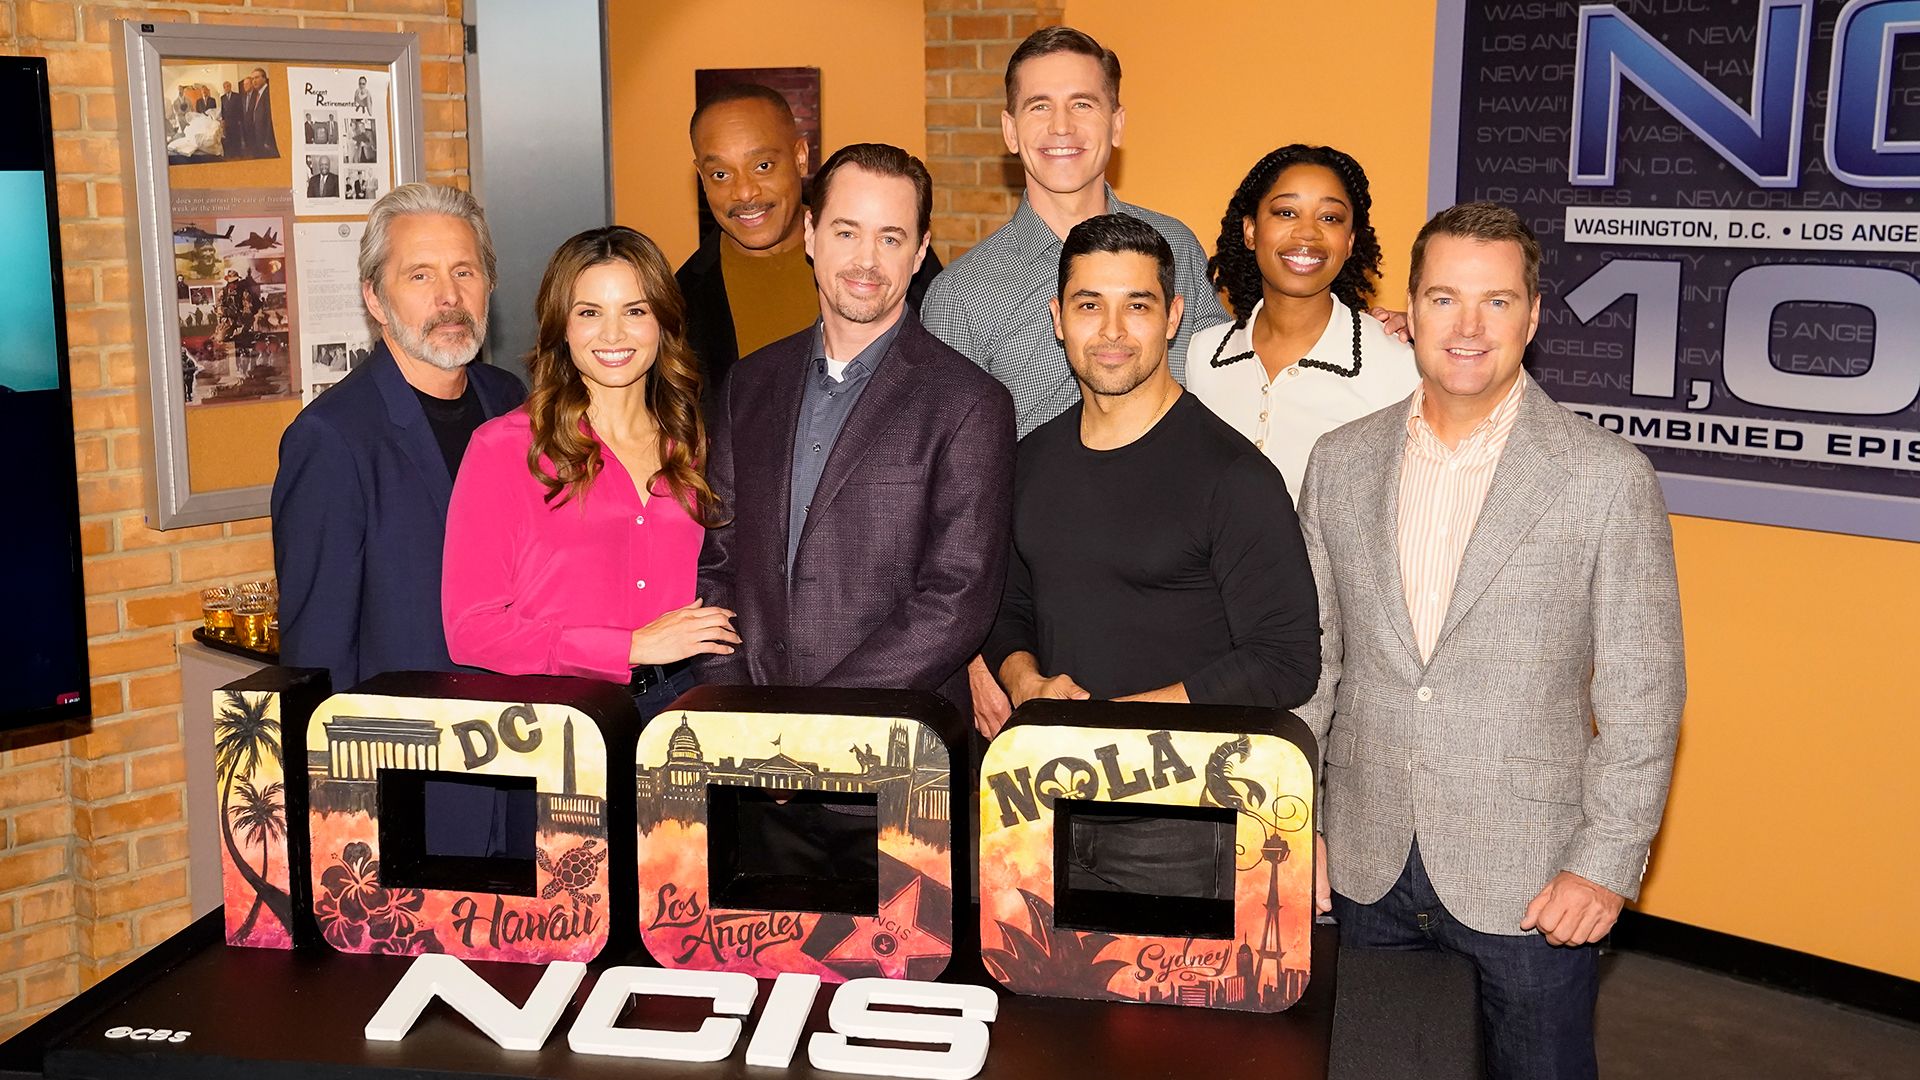 Gary Cole, Katrina Law, Rocky Carroll, Sean Murray, Brian Dietzen, Wilmer Valderrama, Diona Reasonover, and Chris O'Donnell celebrate NCIS 1000th episode. 